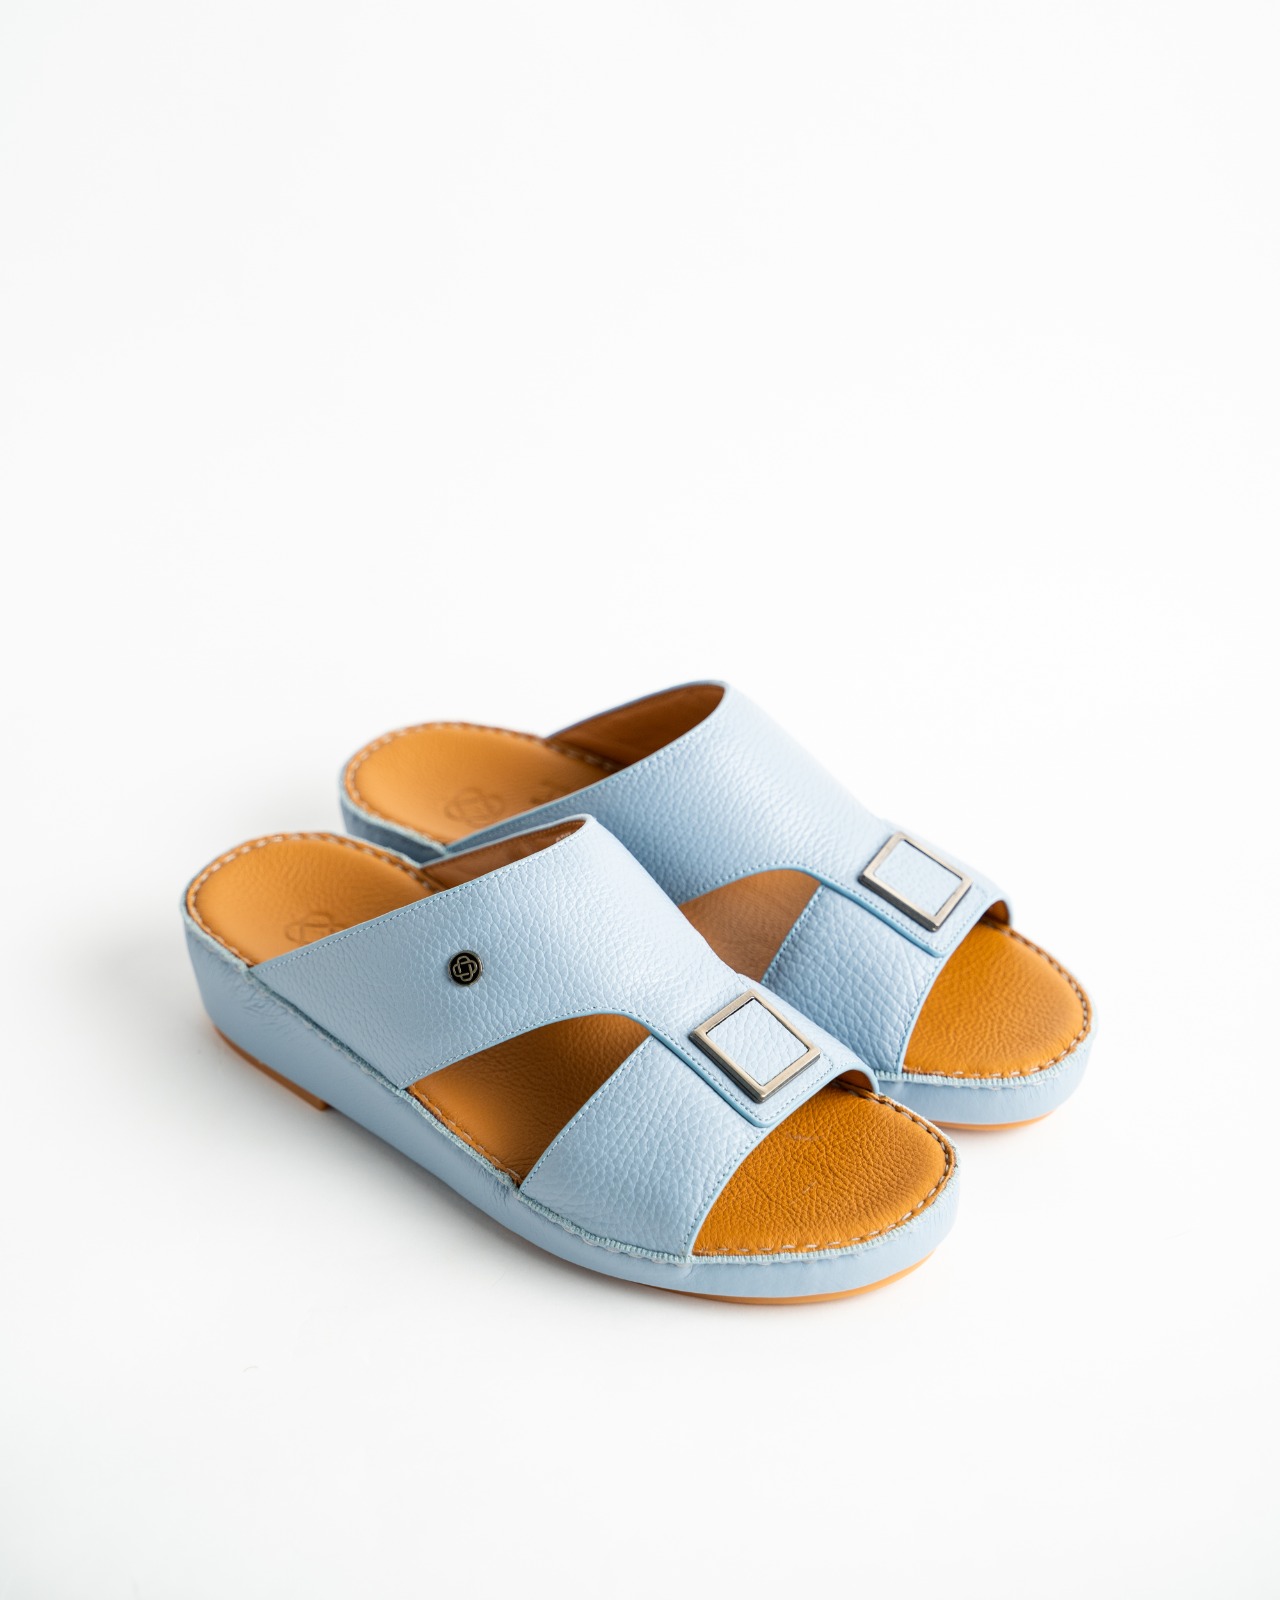 Buy OBH Men Sandals Model 20 Waterfall Color Online in UAE | OBH Collection